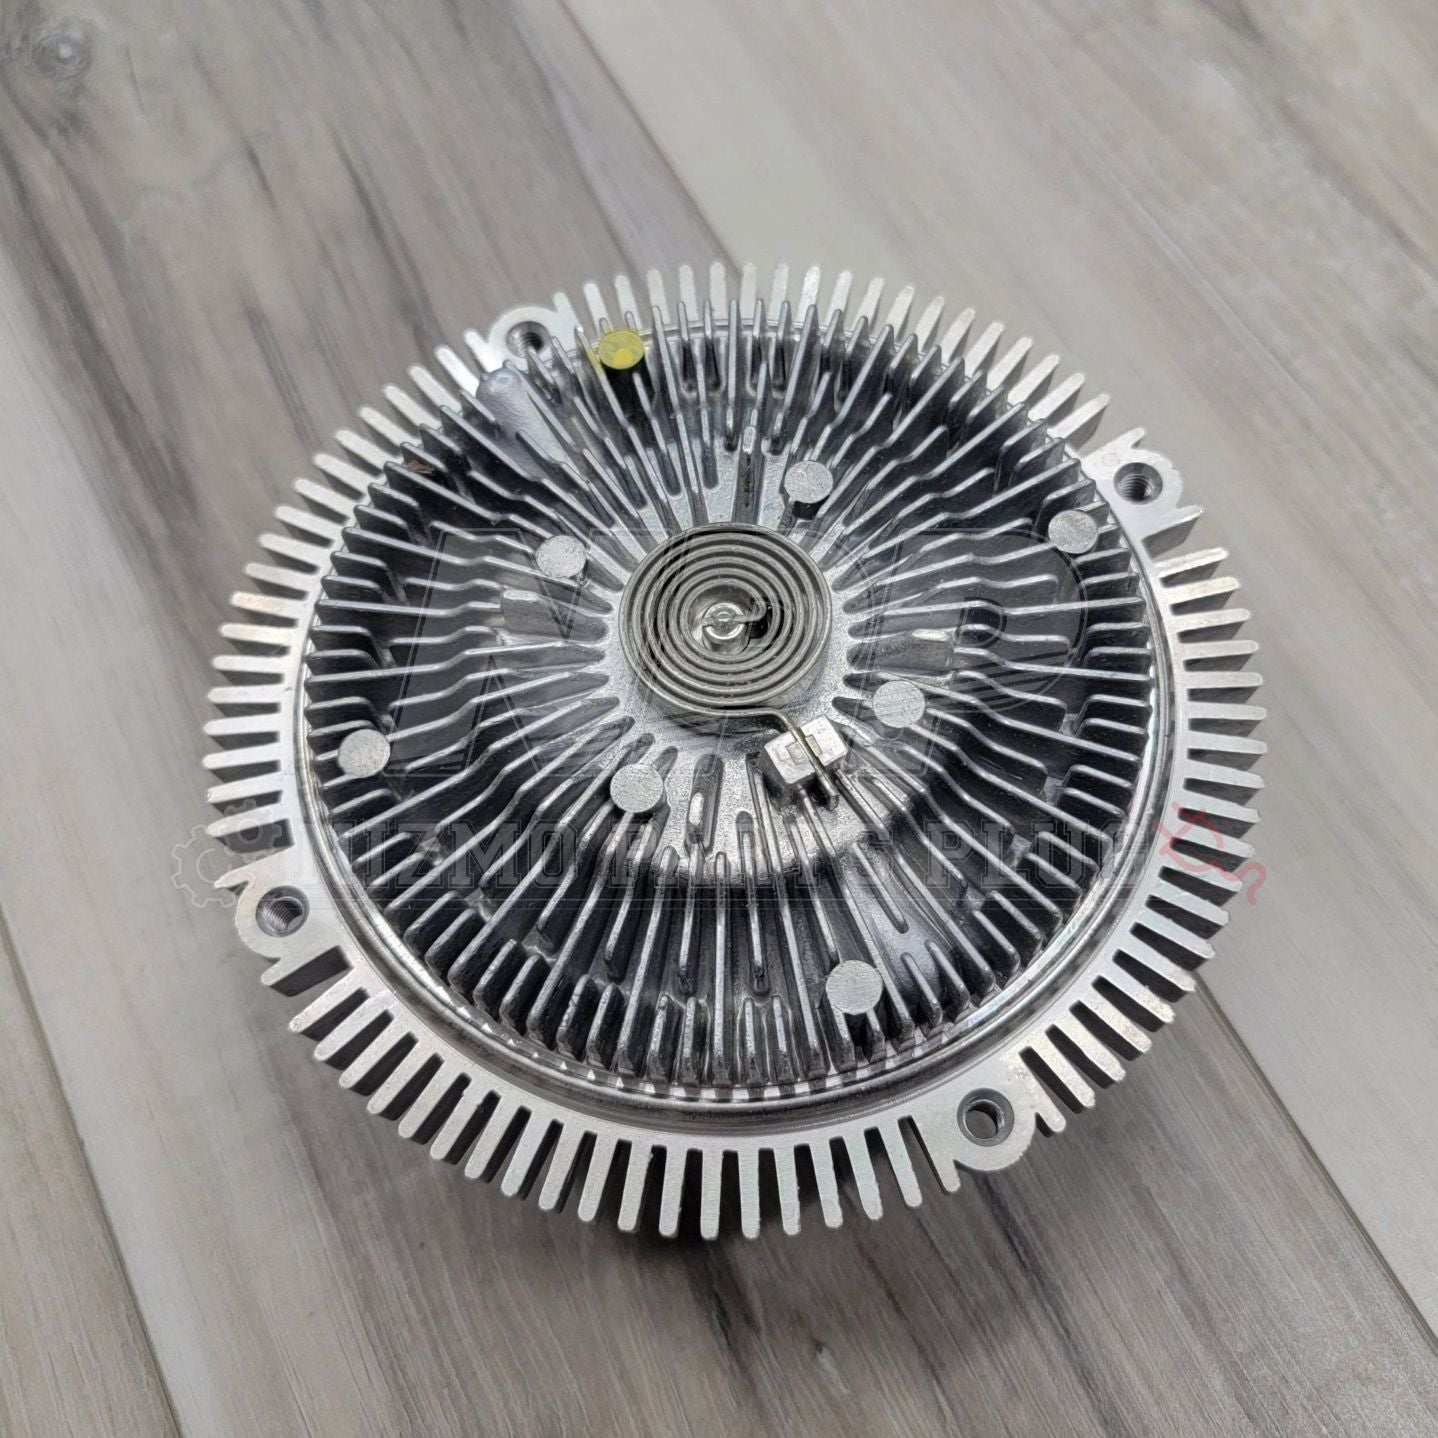 SR20DET Engine Fan Clutch Assembly